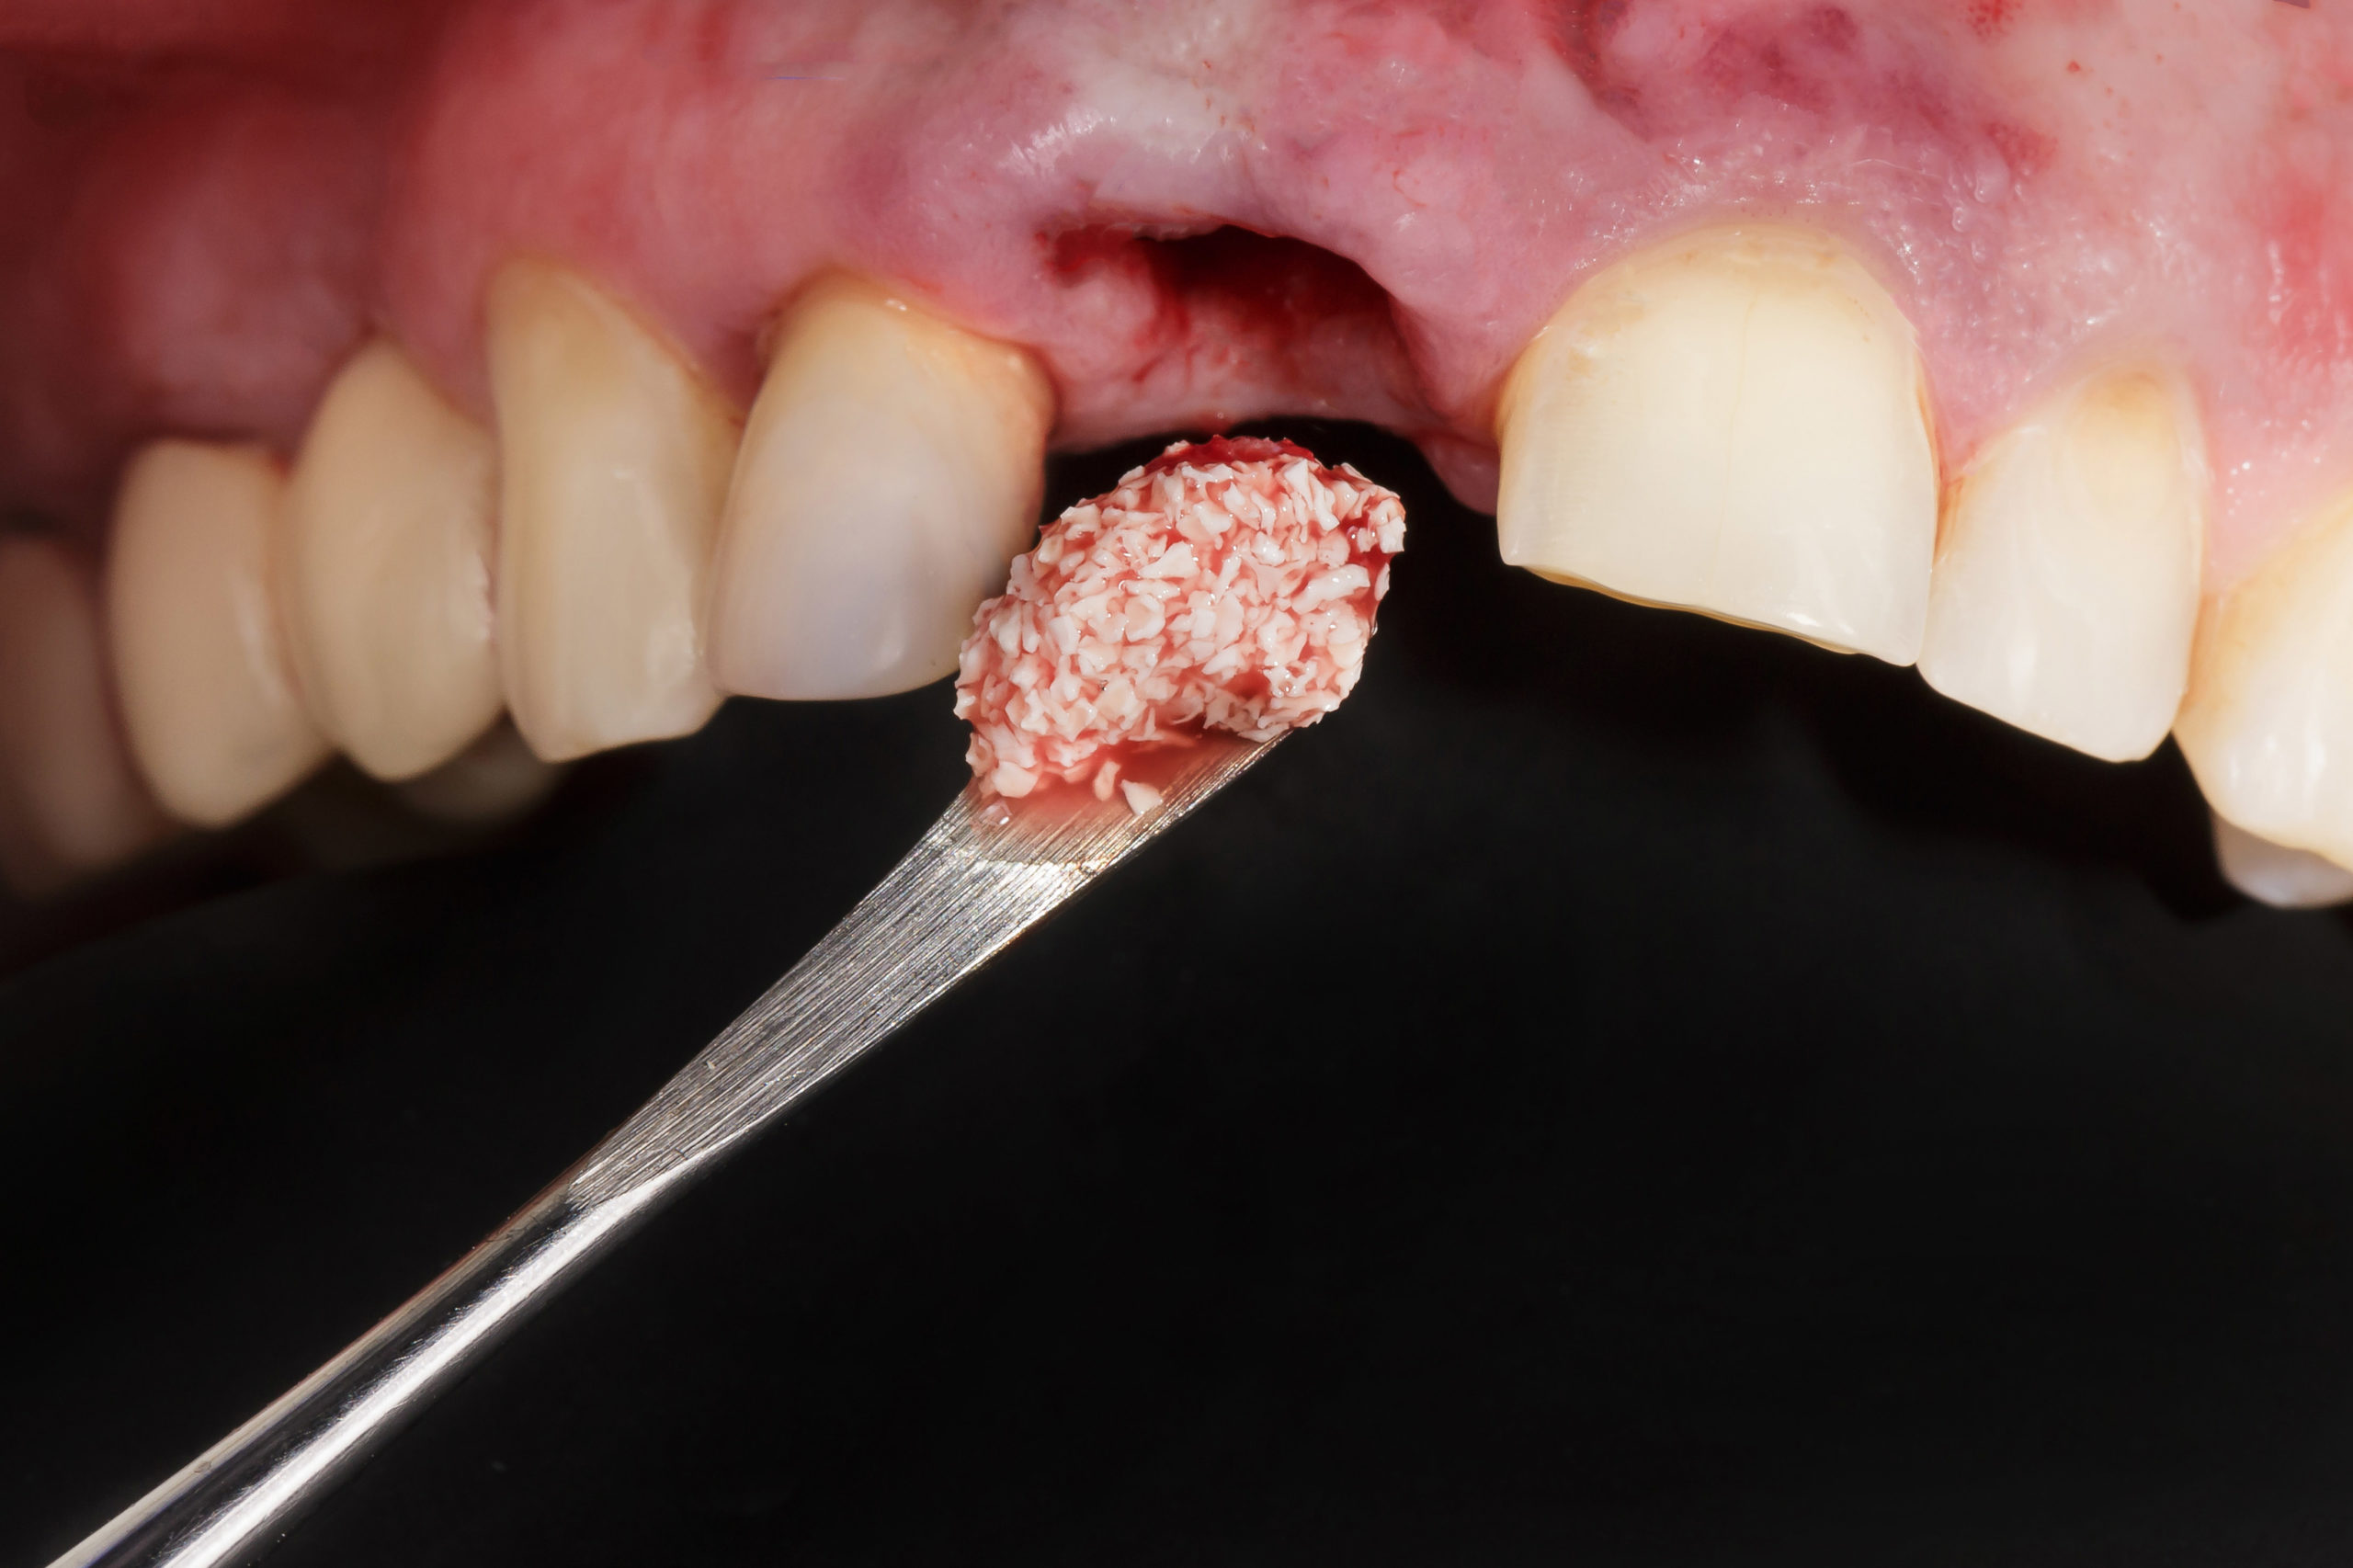 dental procedure, addition of artificial bone, for dental implan